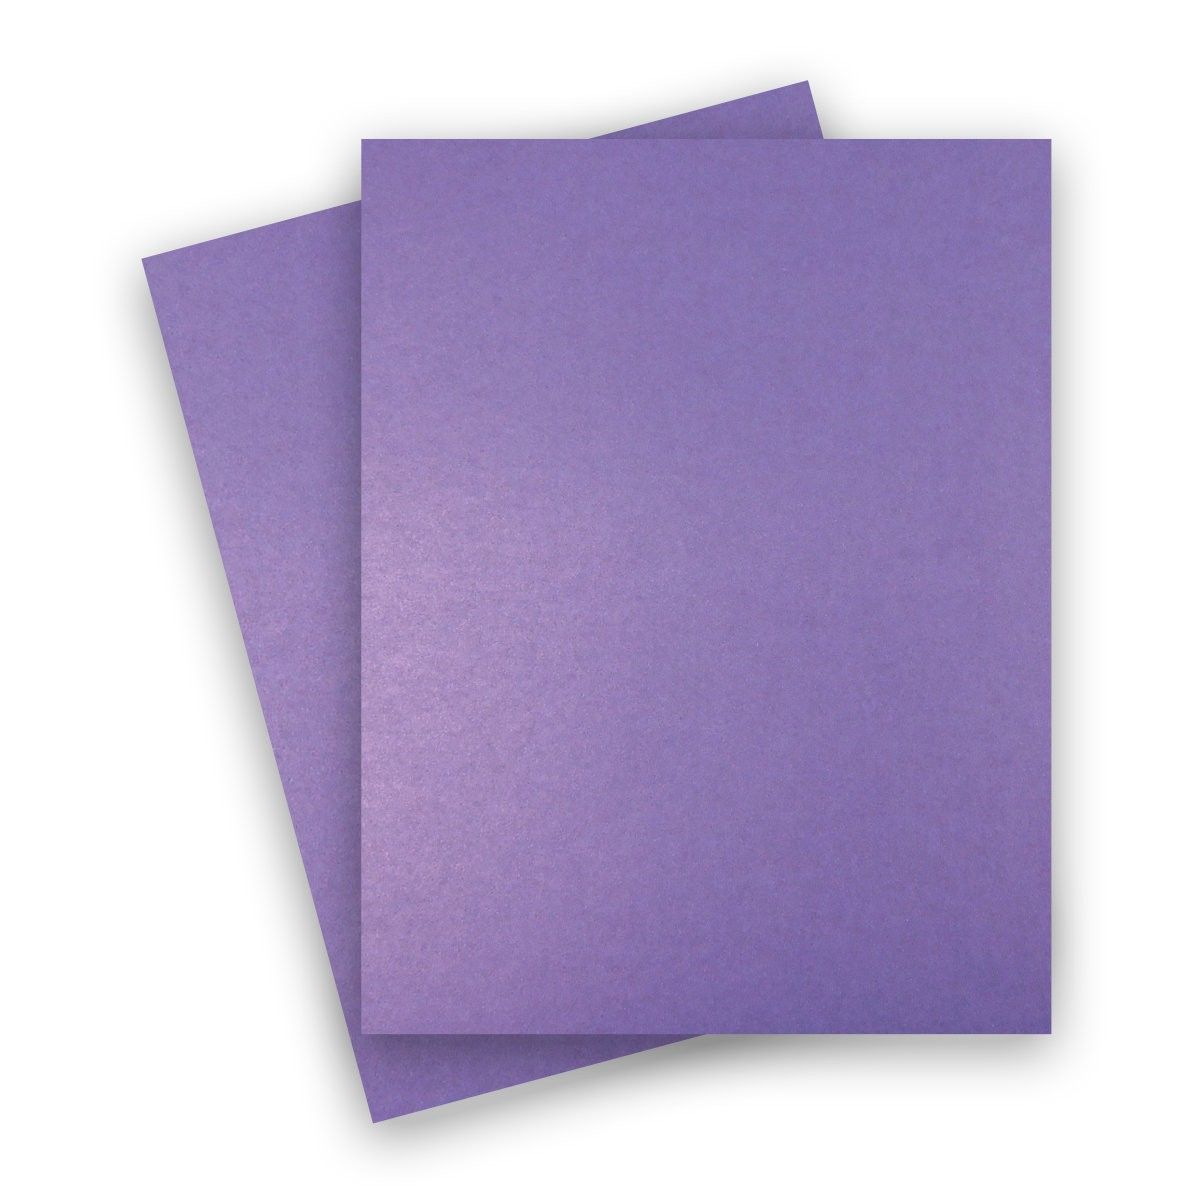 Shine BLUE SATIN - Shimmer Metallic Card Stock Paper - 12 x 18